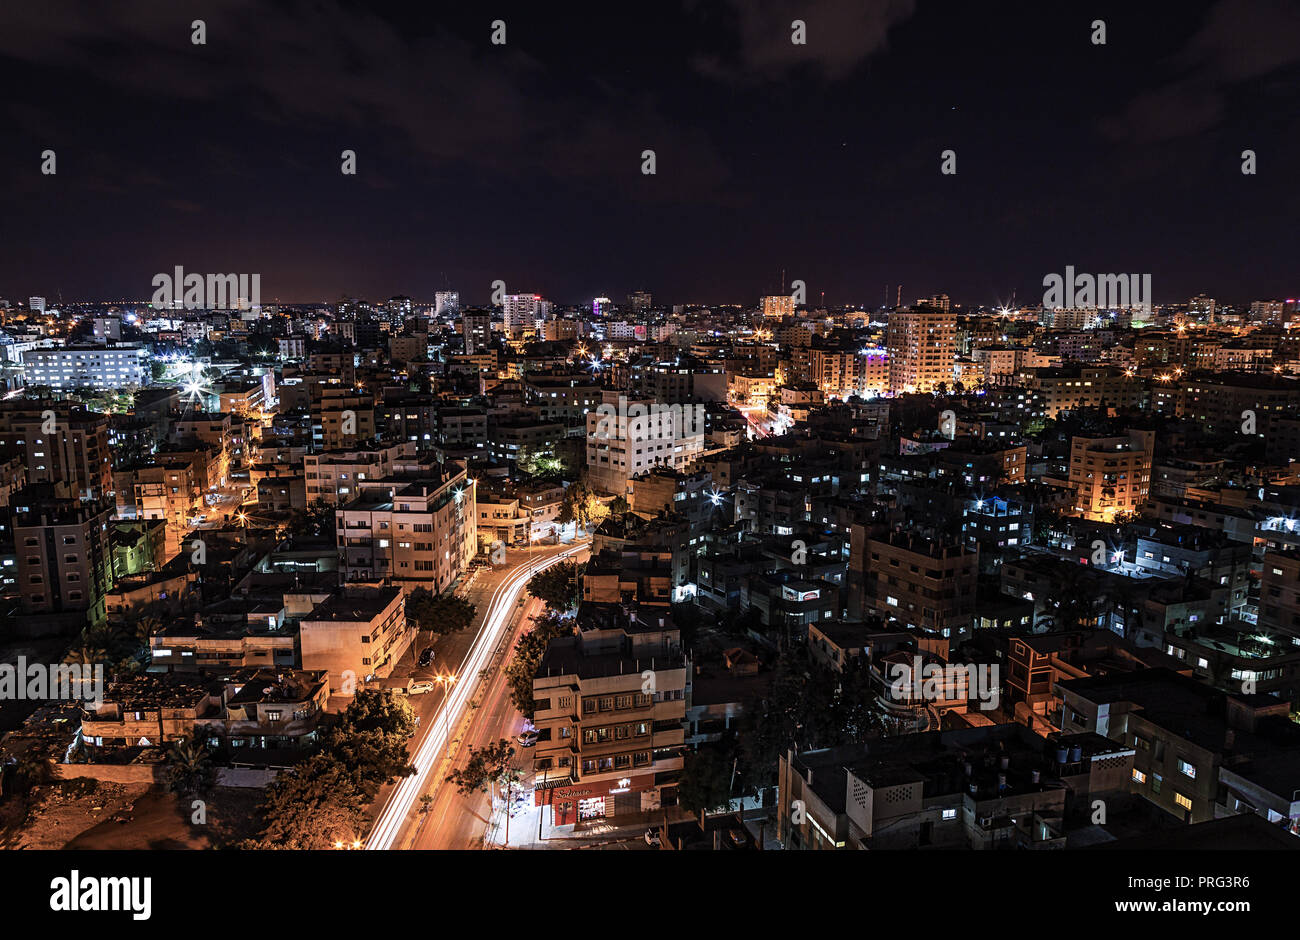 A photo of Gaza City at night. Stock Photo